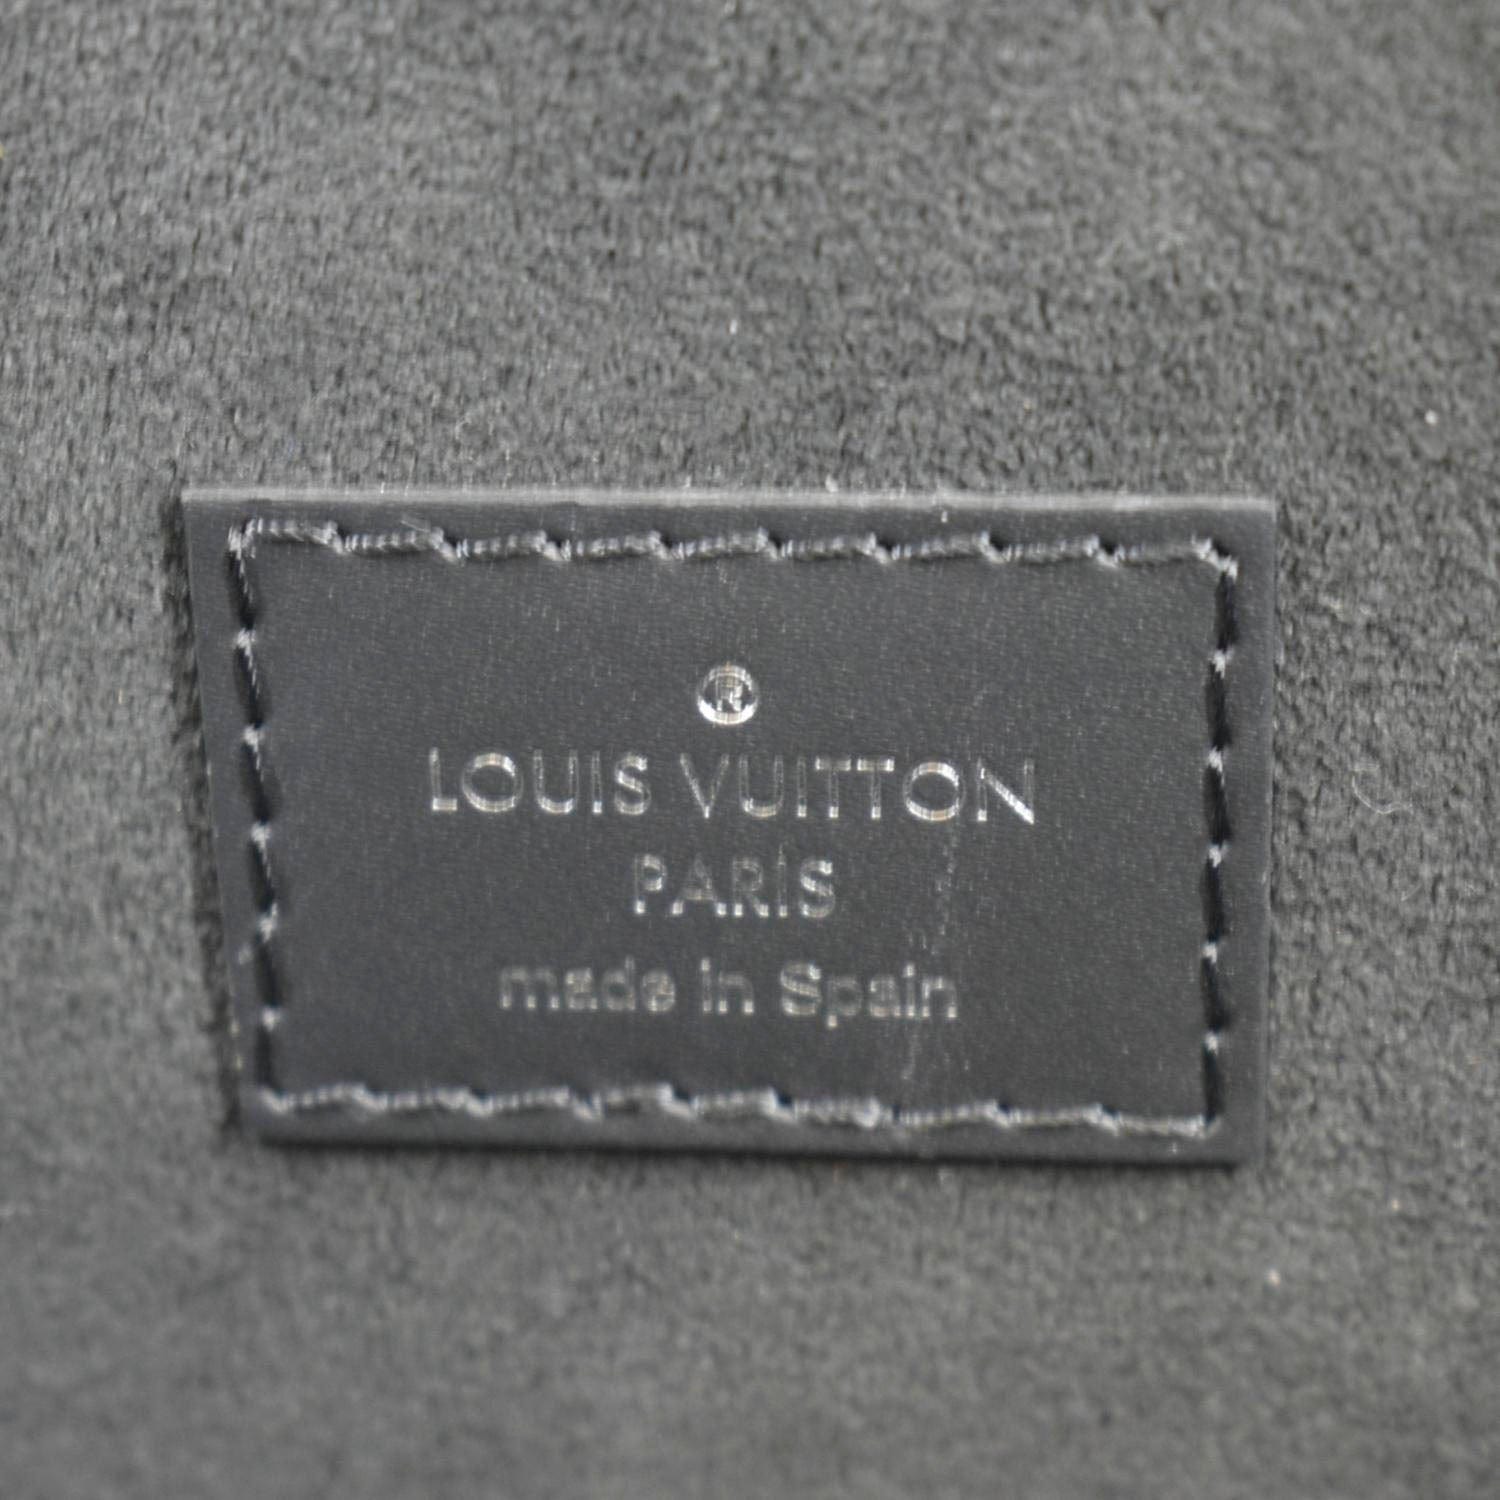 LOUIS VUITTON Neverfull Epi Leather Tote Shoulder Bag Black